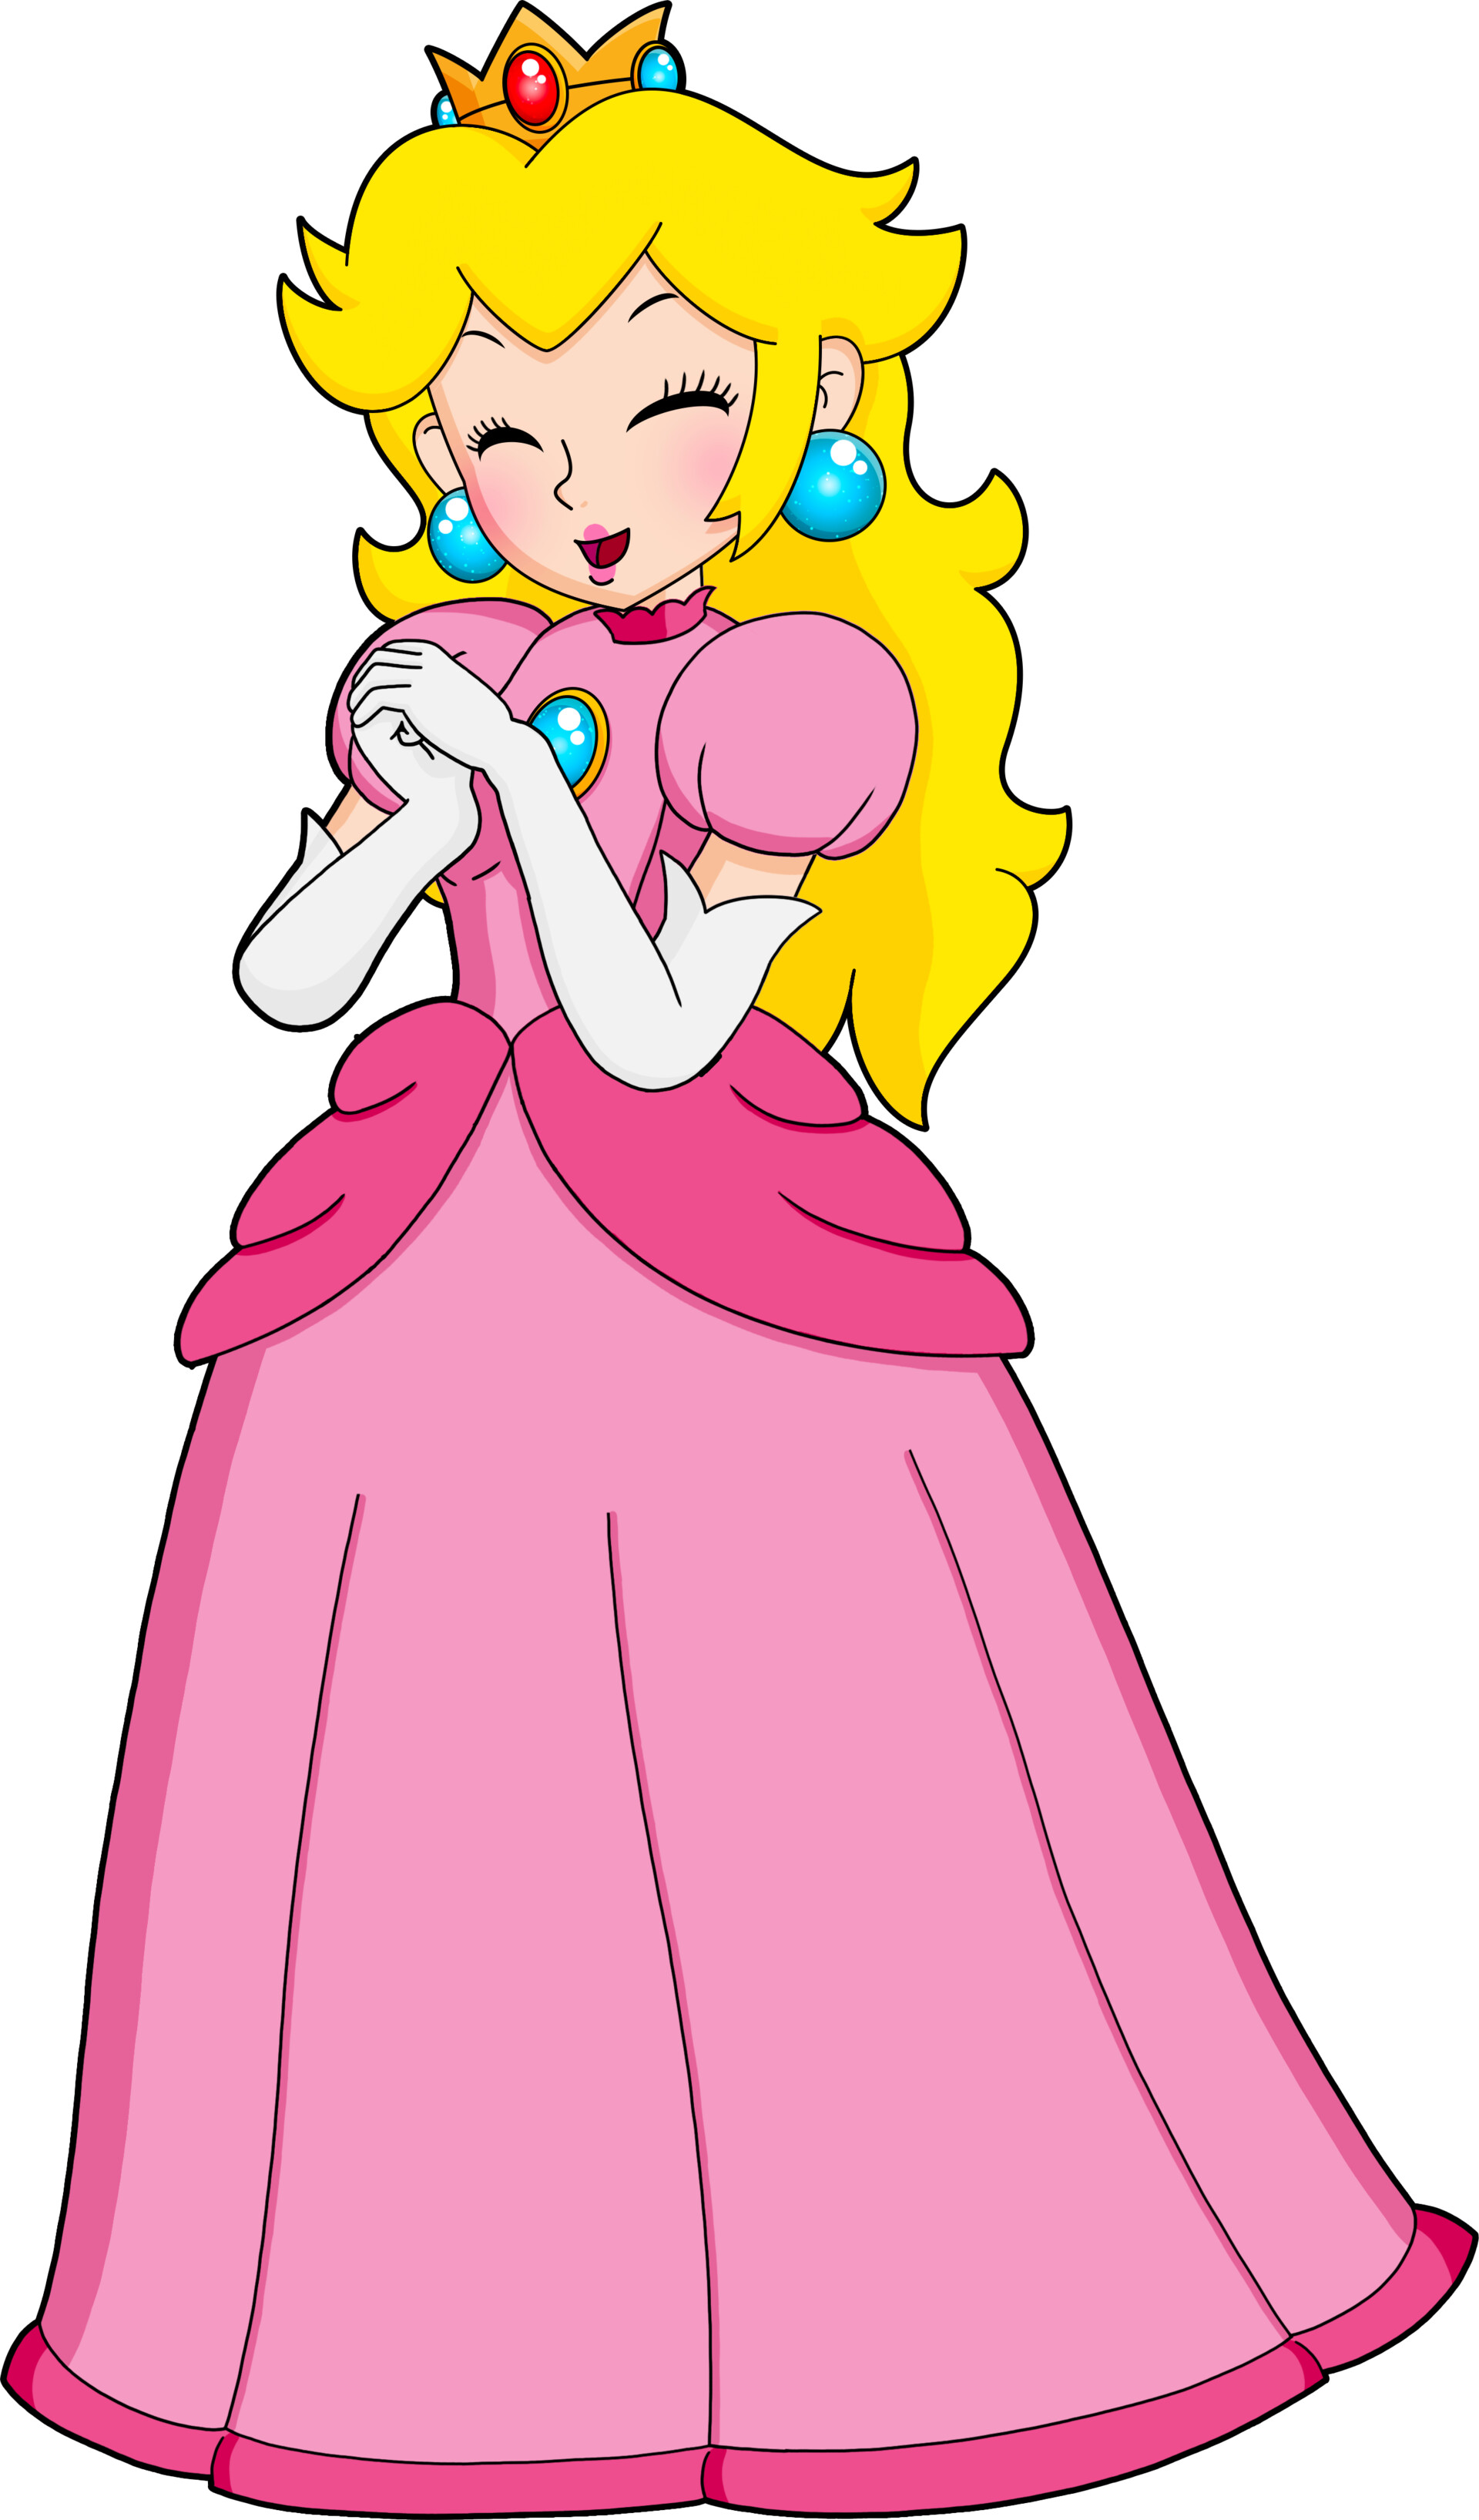 ArtStation - Super Mario Bros.: Danielle Corona: Princess Peach Expressions